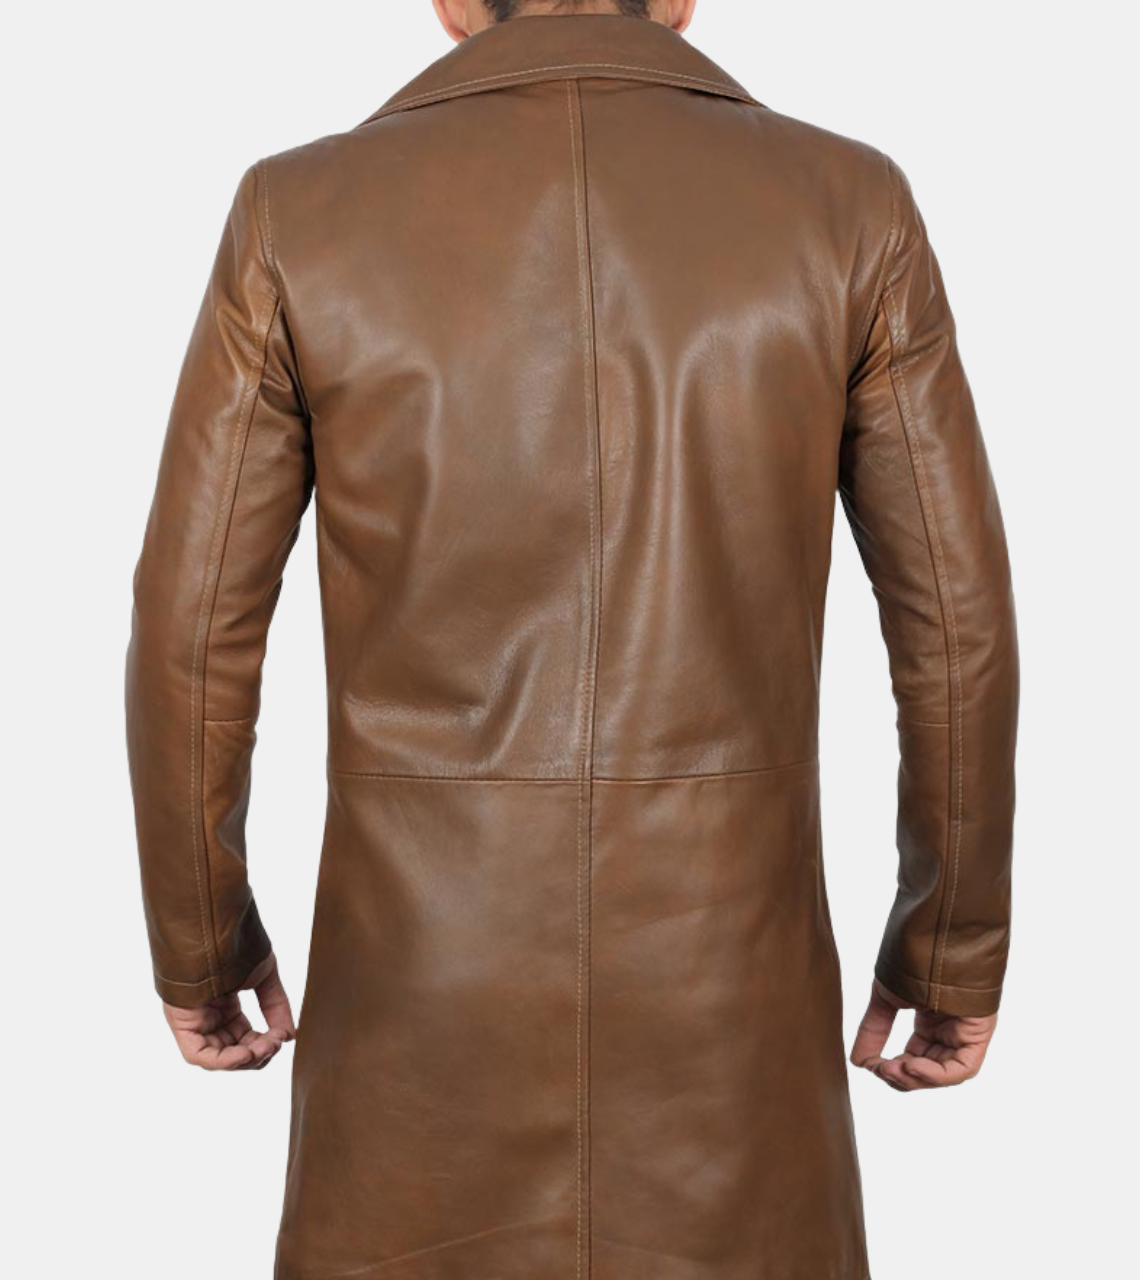  Avies Men's Brown Leather Coat  Back